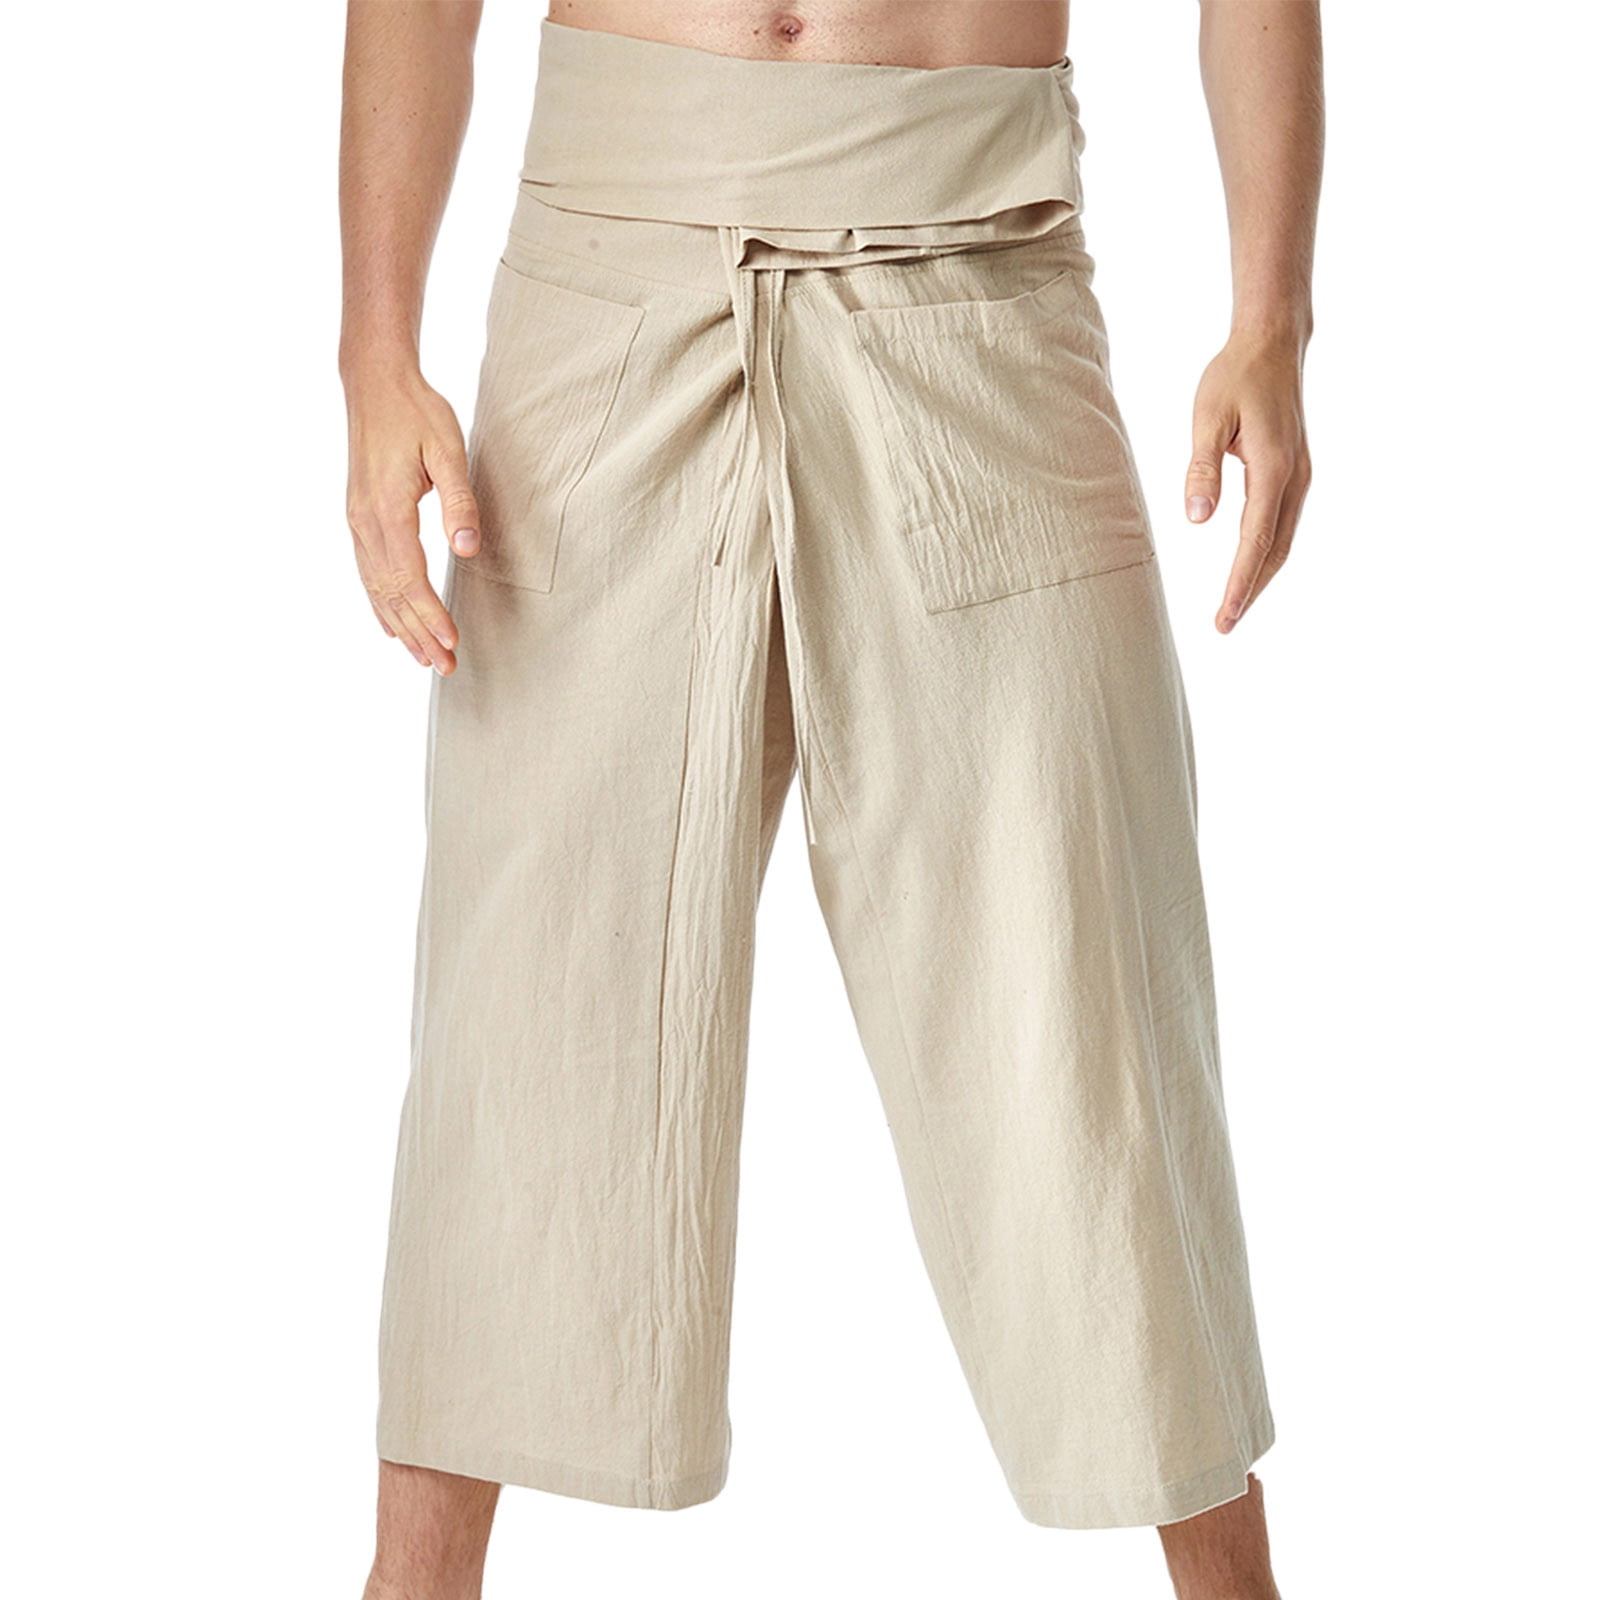 Tuphregyow Men's Thai Fisherman Pants Solid Perfect for Yoga, Martial Arts,  Pirate, Medieval, Japanese Pantalones Cotton Widde Leg Loose Pants  Drawstring Pants with Pockets Coffee Free Size 